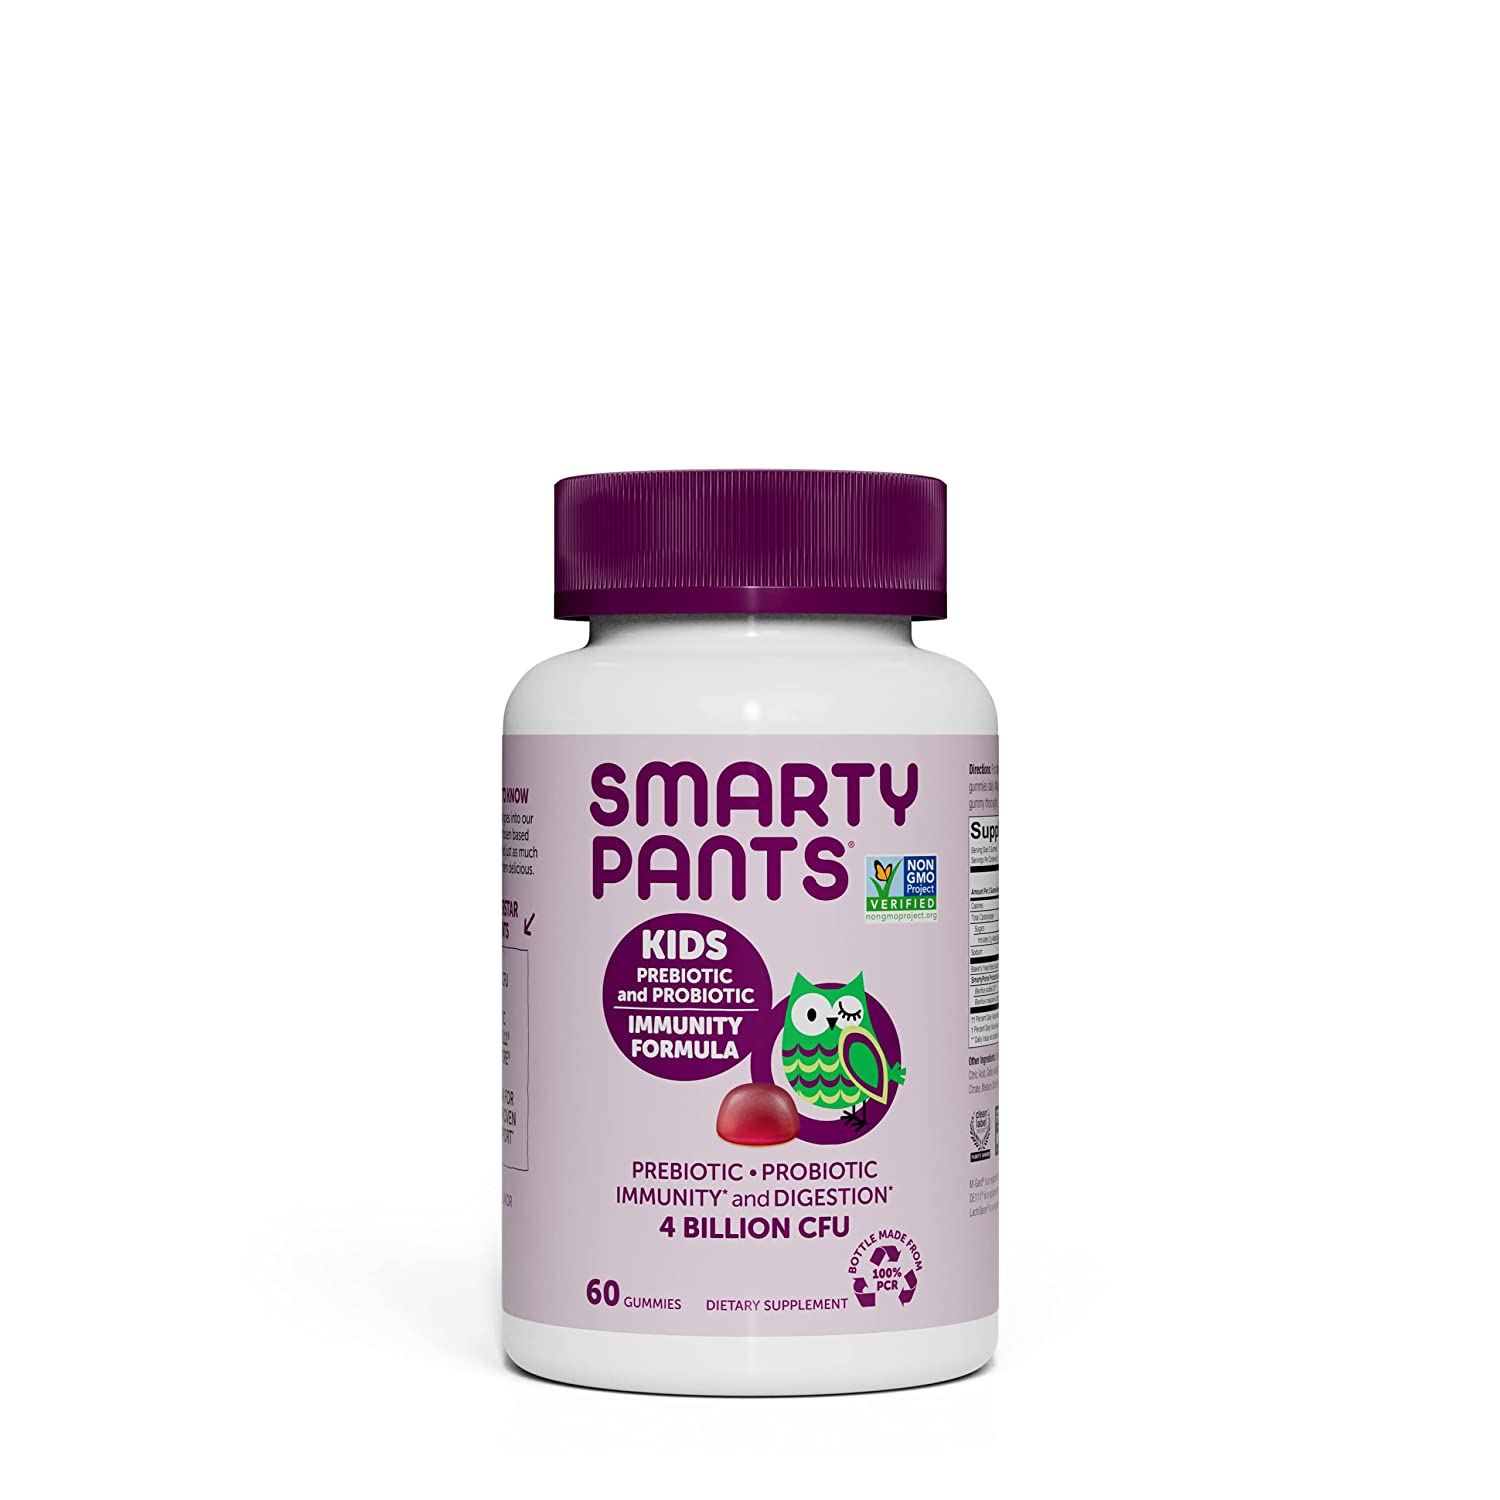 SmartyPants Probiotic and Prebiotic Immunity Gummies